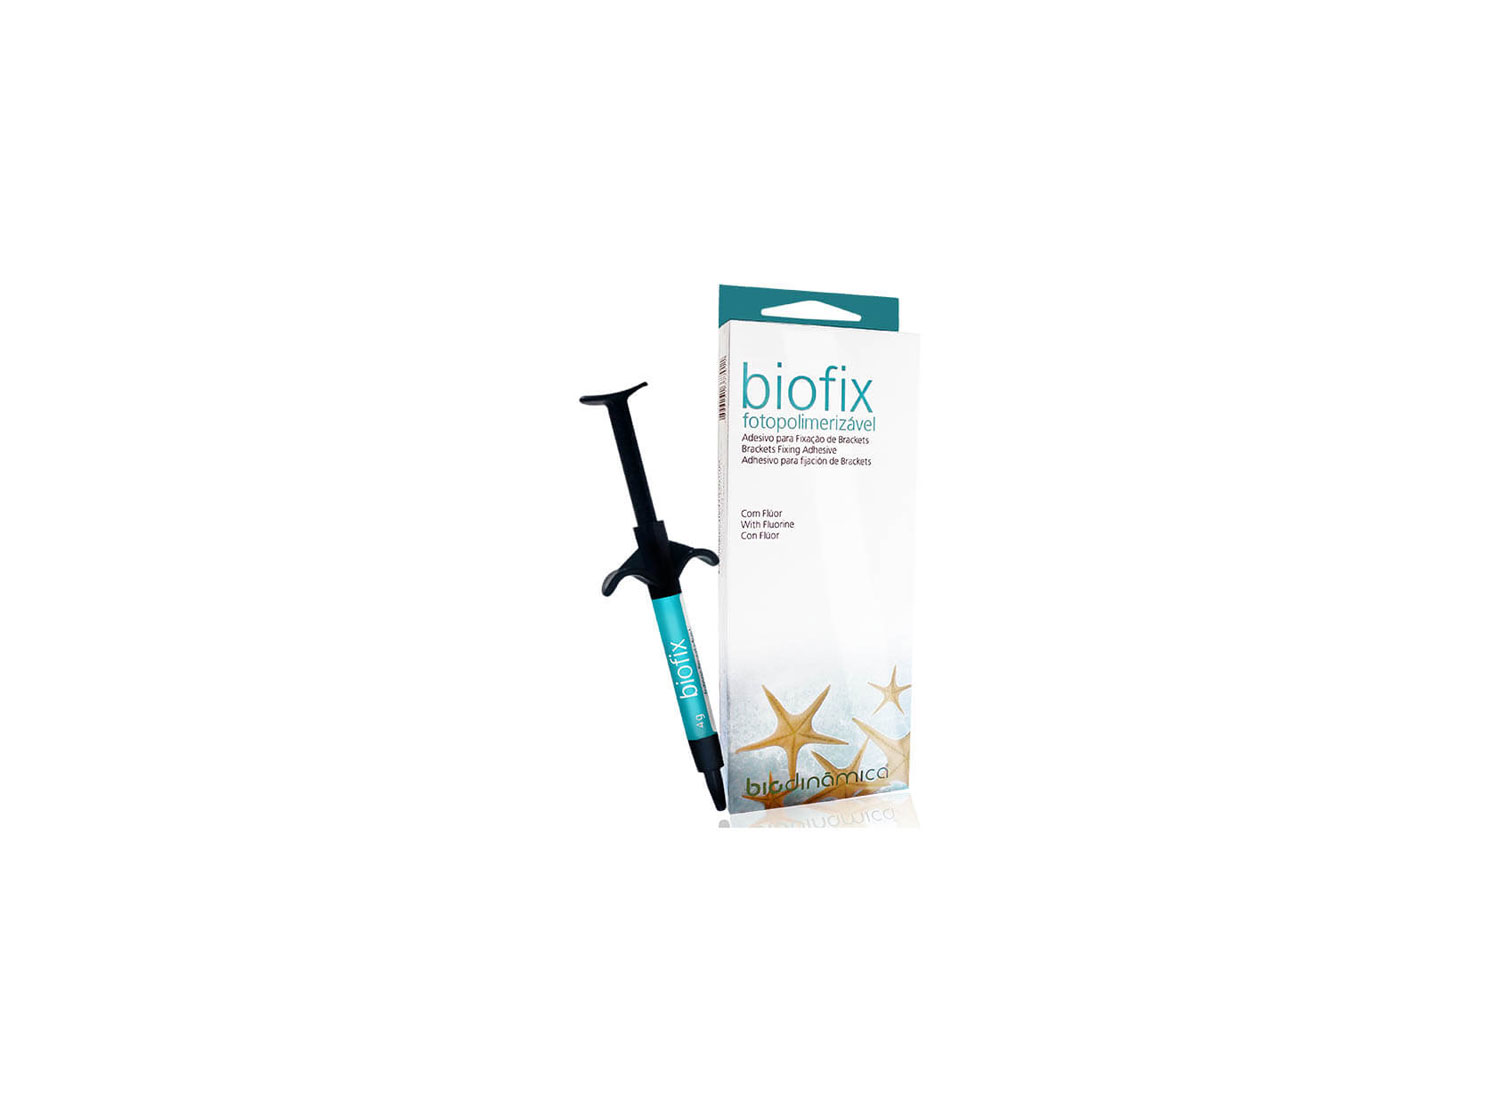 کامپوزیت لایت کیور ارتودنسی Biofix برند Biodinamica